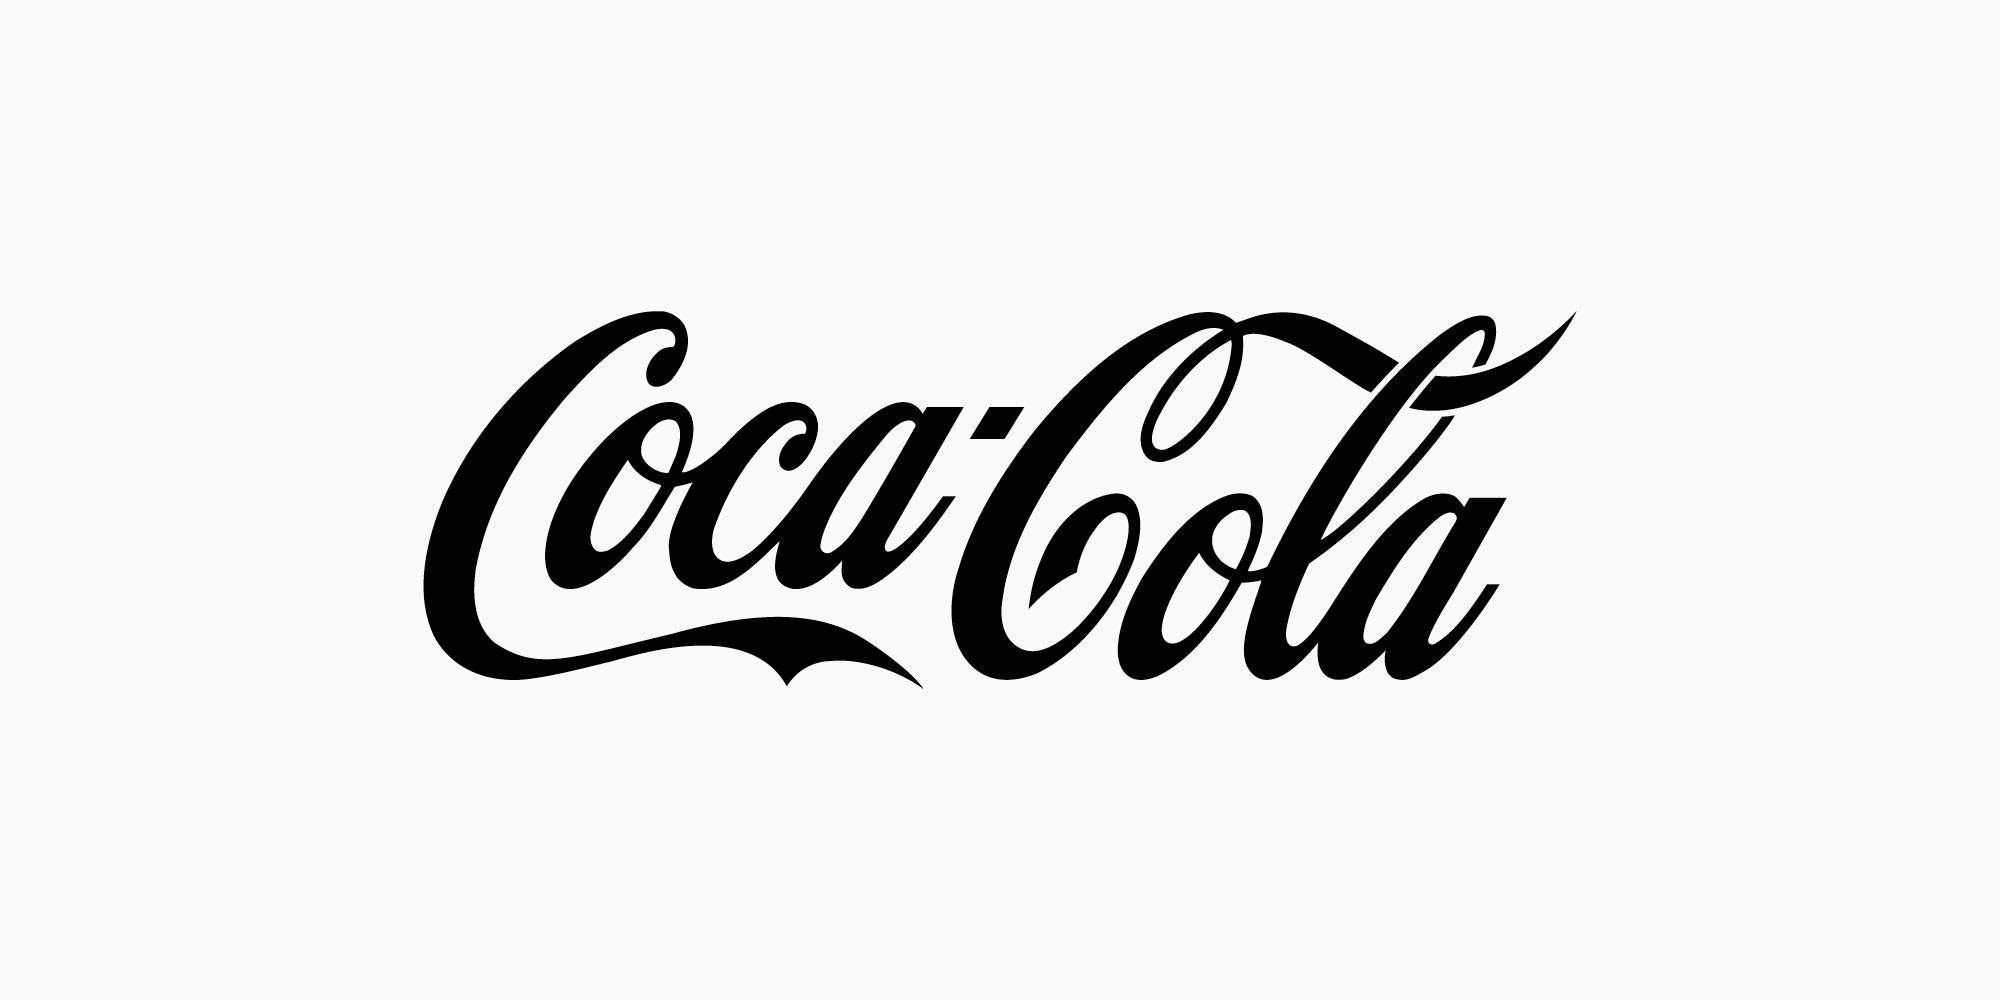 Coca-Cola, Minecraft, Nickelodeon, Tesla, Google, and M&M’s. logo fonts